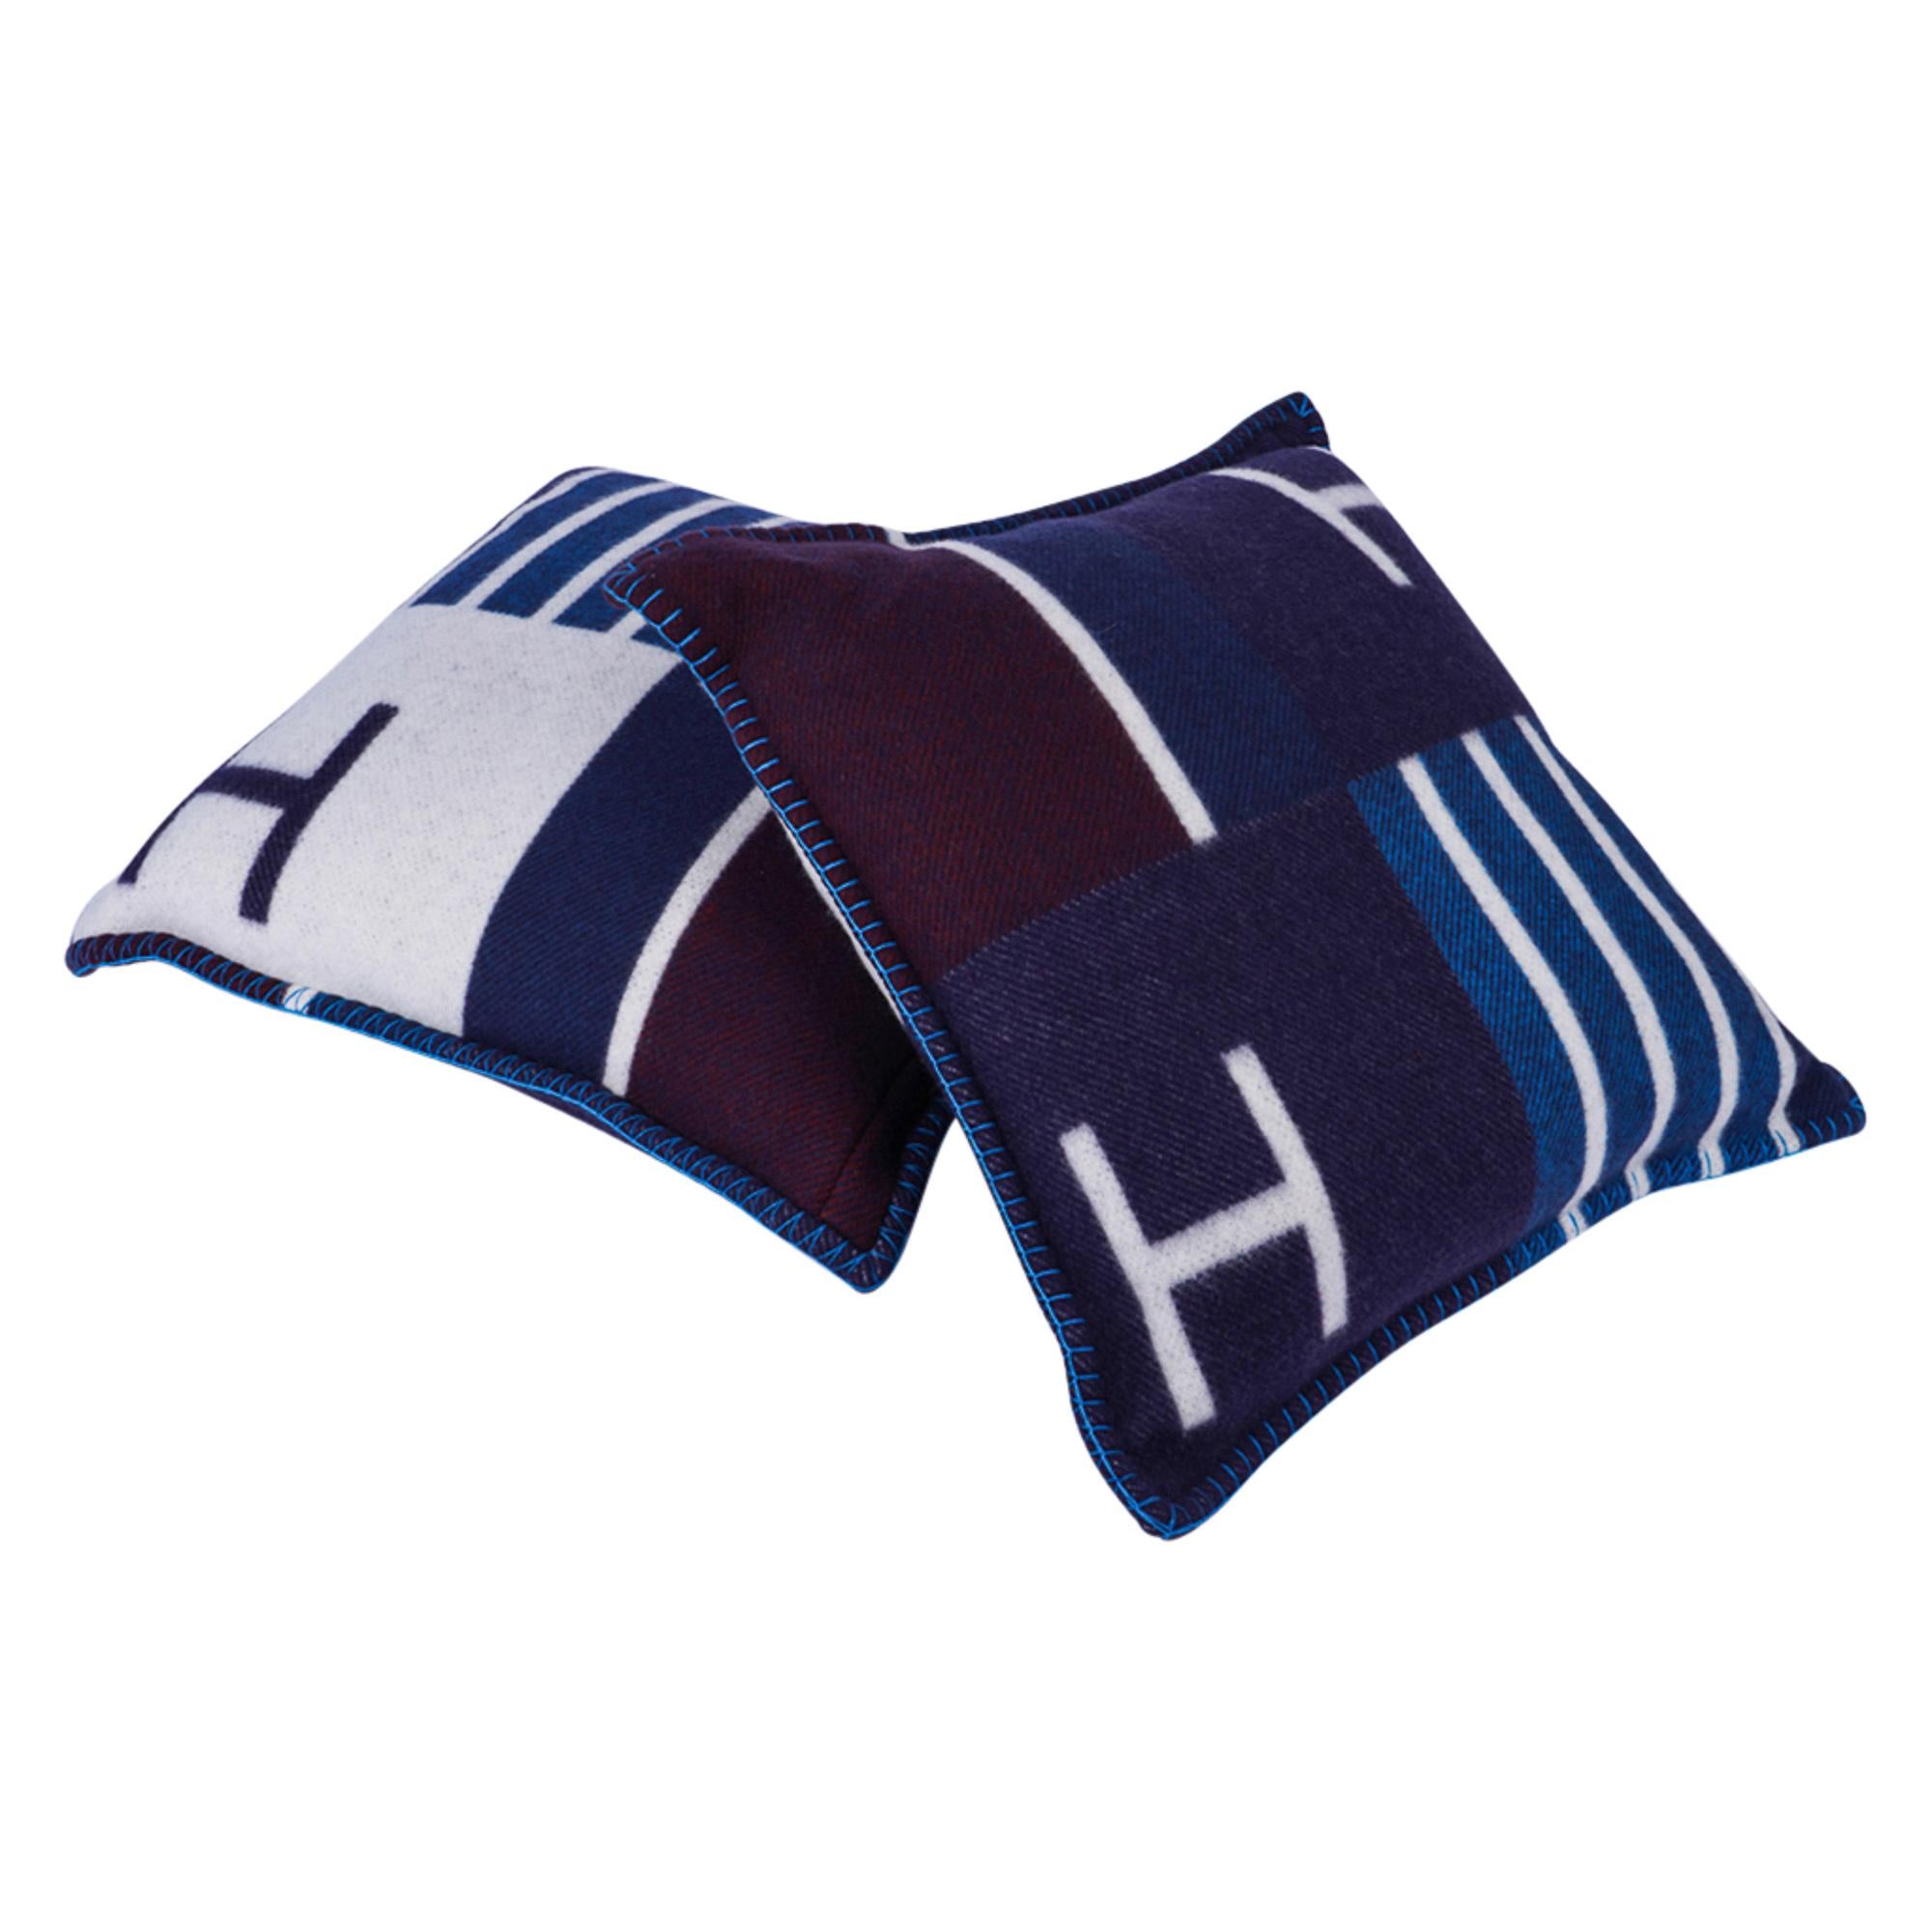 Hermes Cushion Avalon Vibration Blue Marine Small Model Throw Pillow Set of Two 2